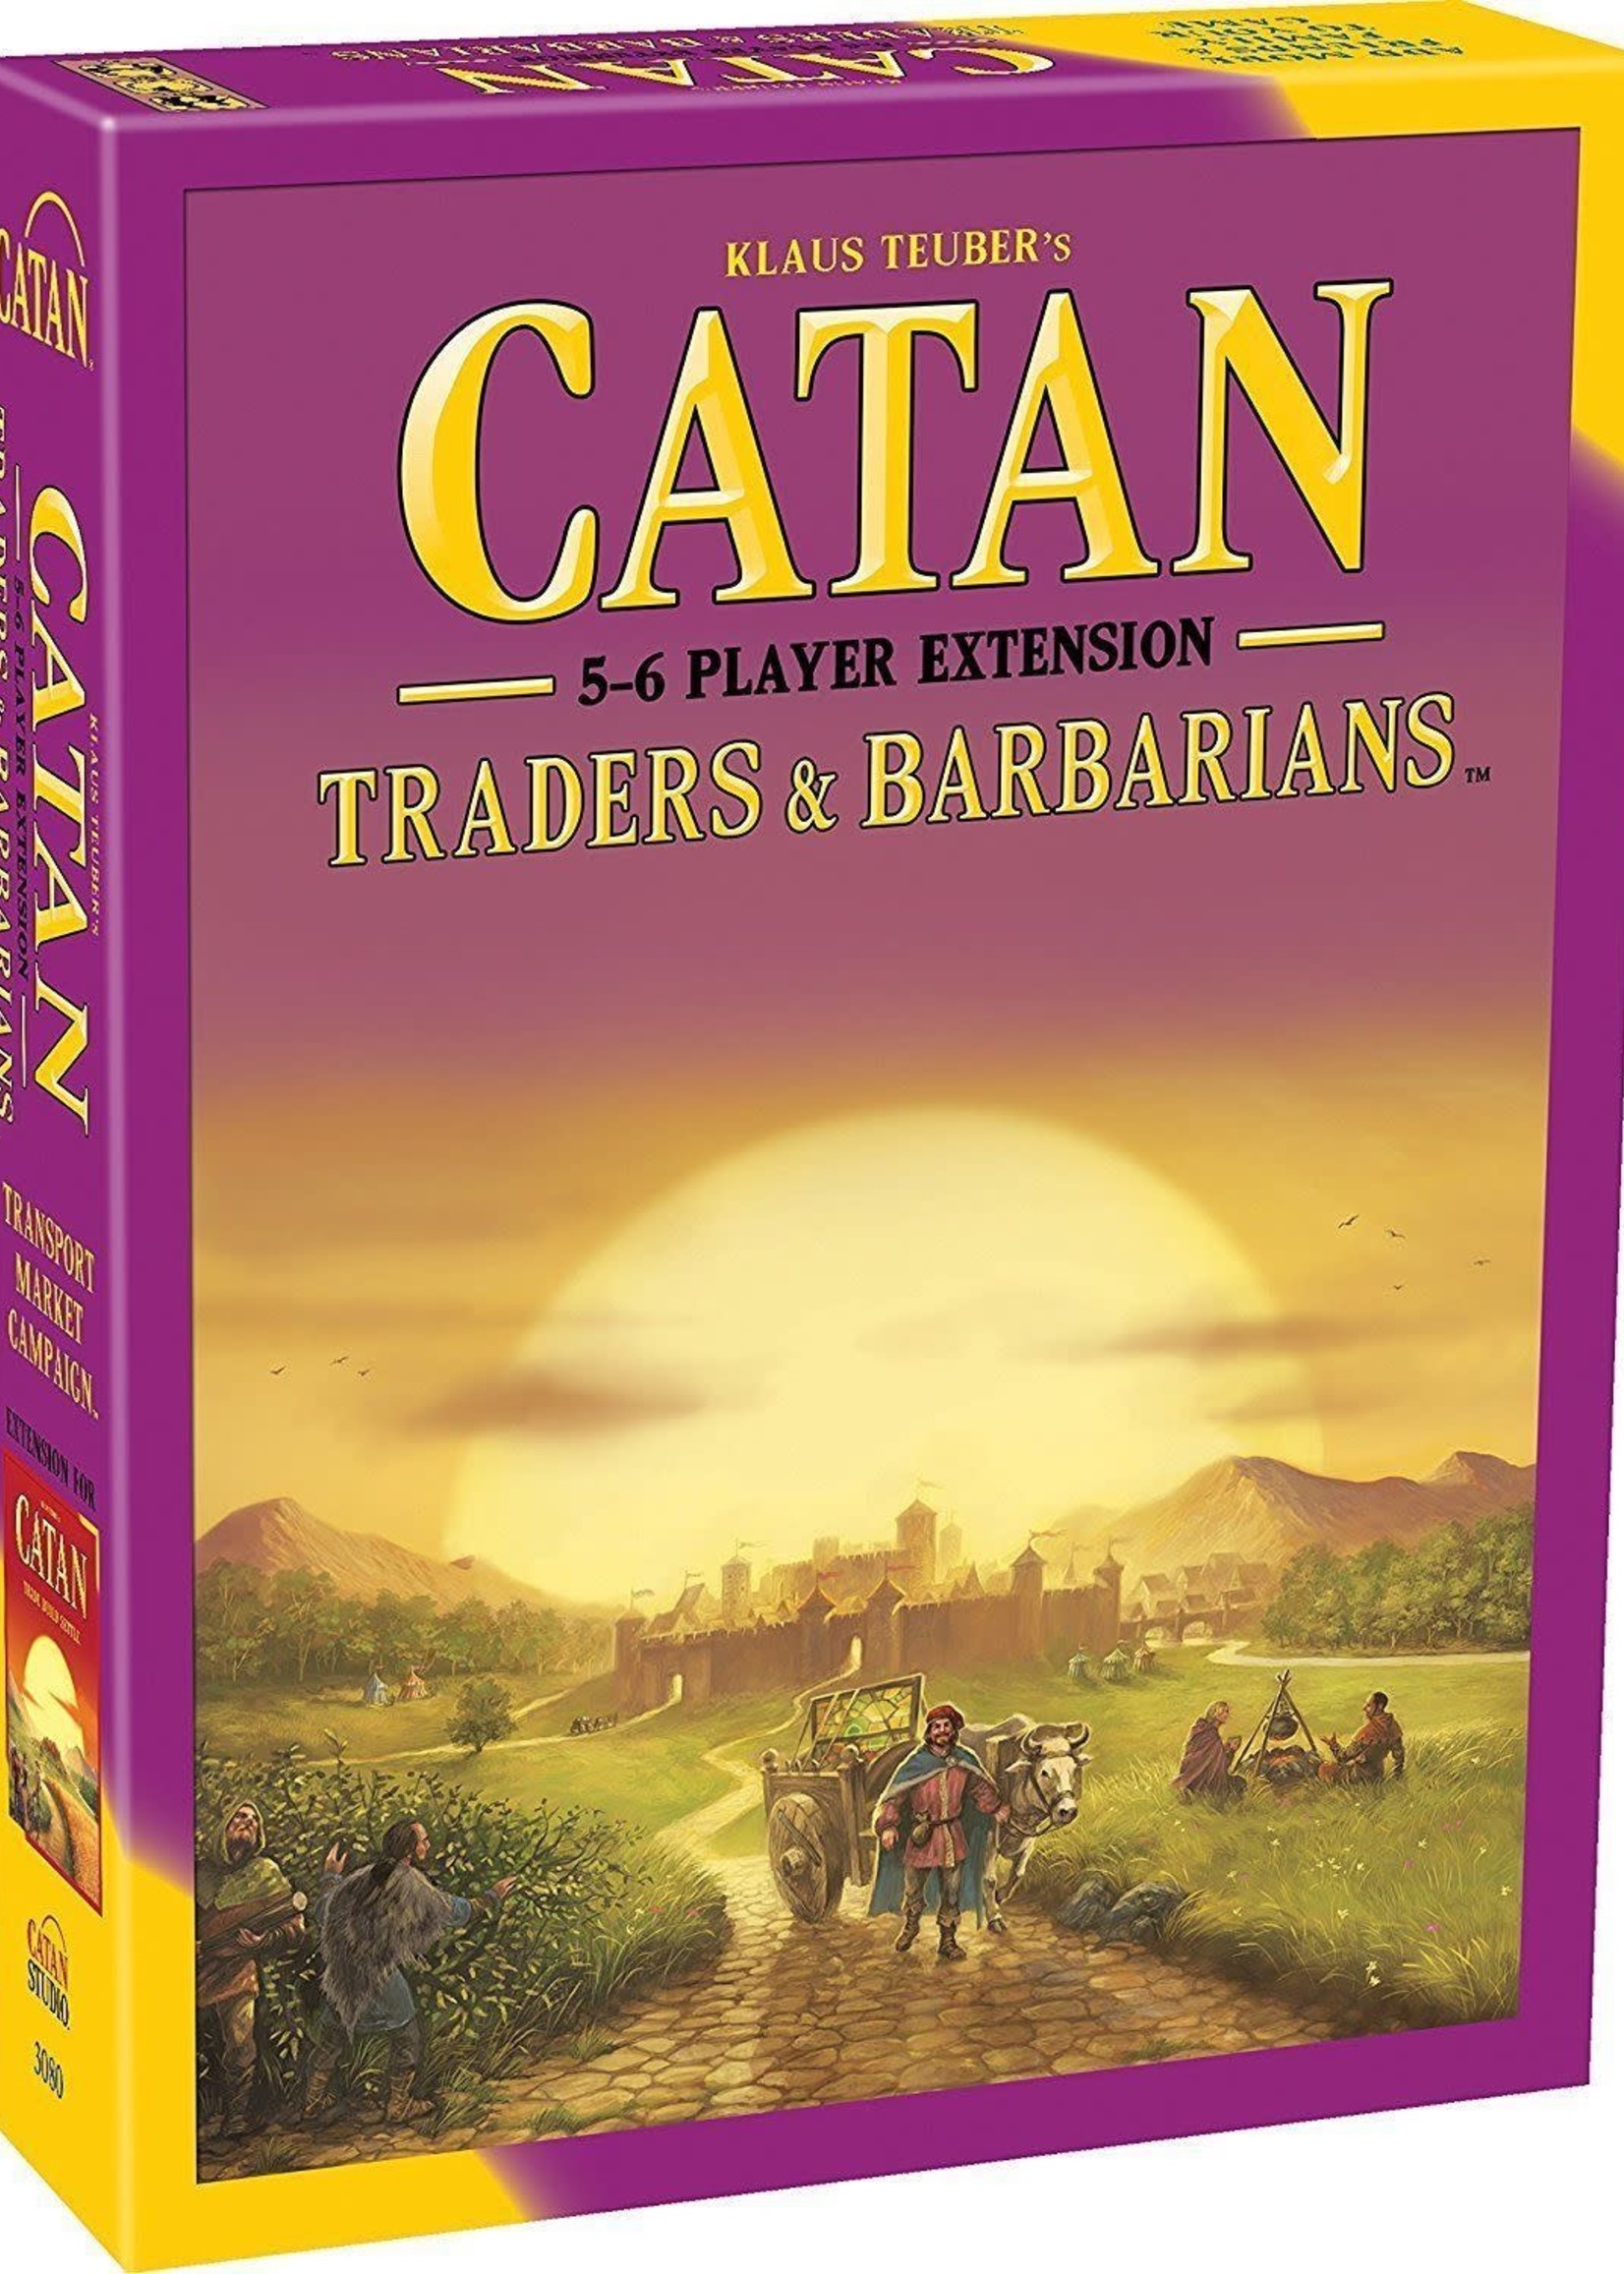 Catan studio Catan - 5-6 player extension - Traders & barbarians